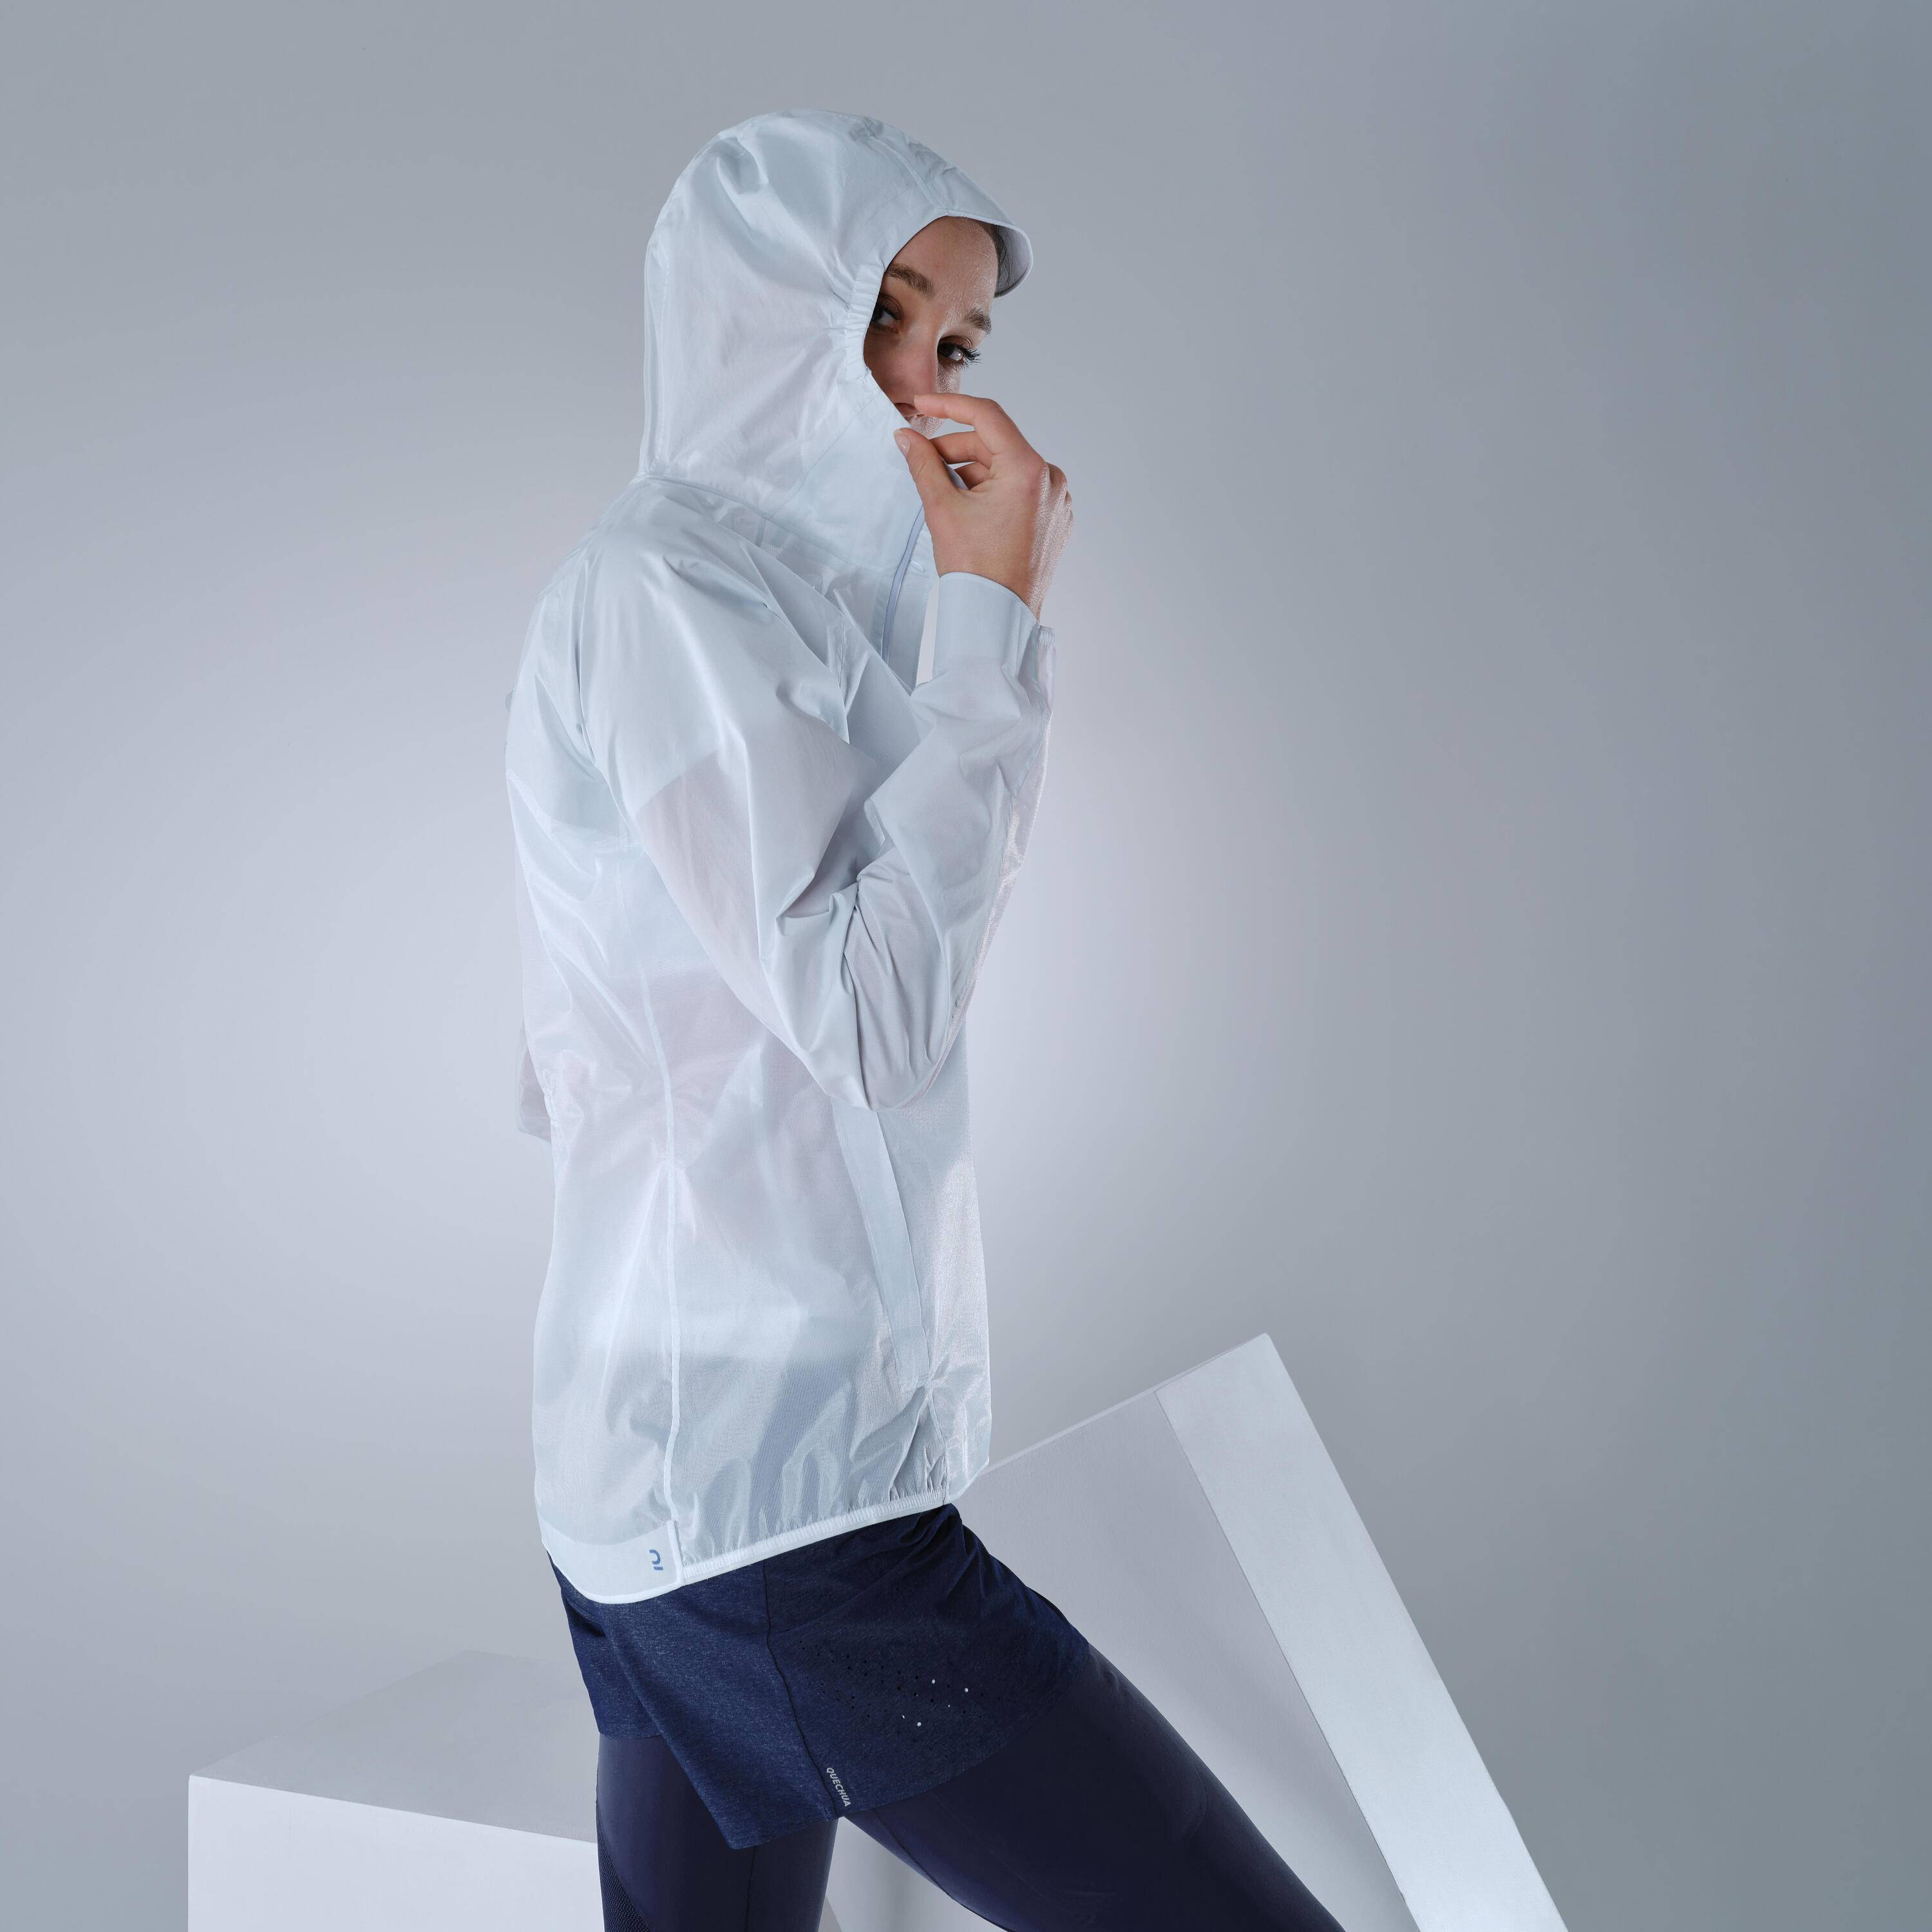 Women’s ultra-light hybrid fast hiking jacket FH900 grey. 9/9